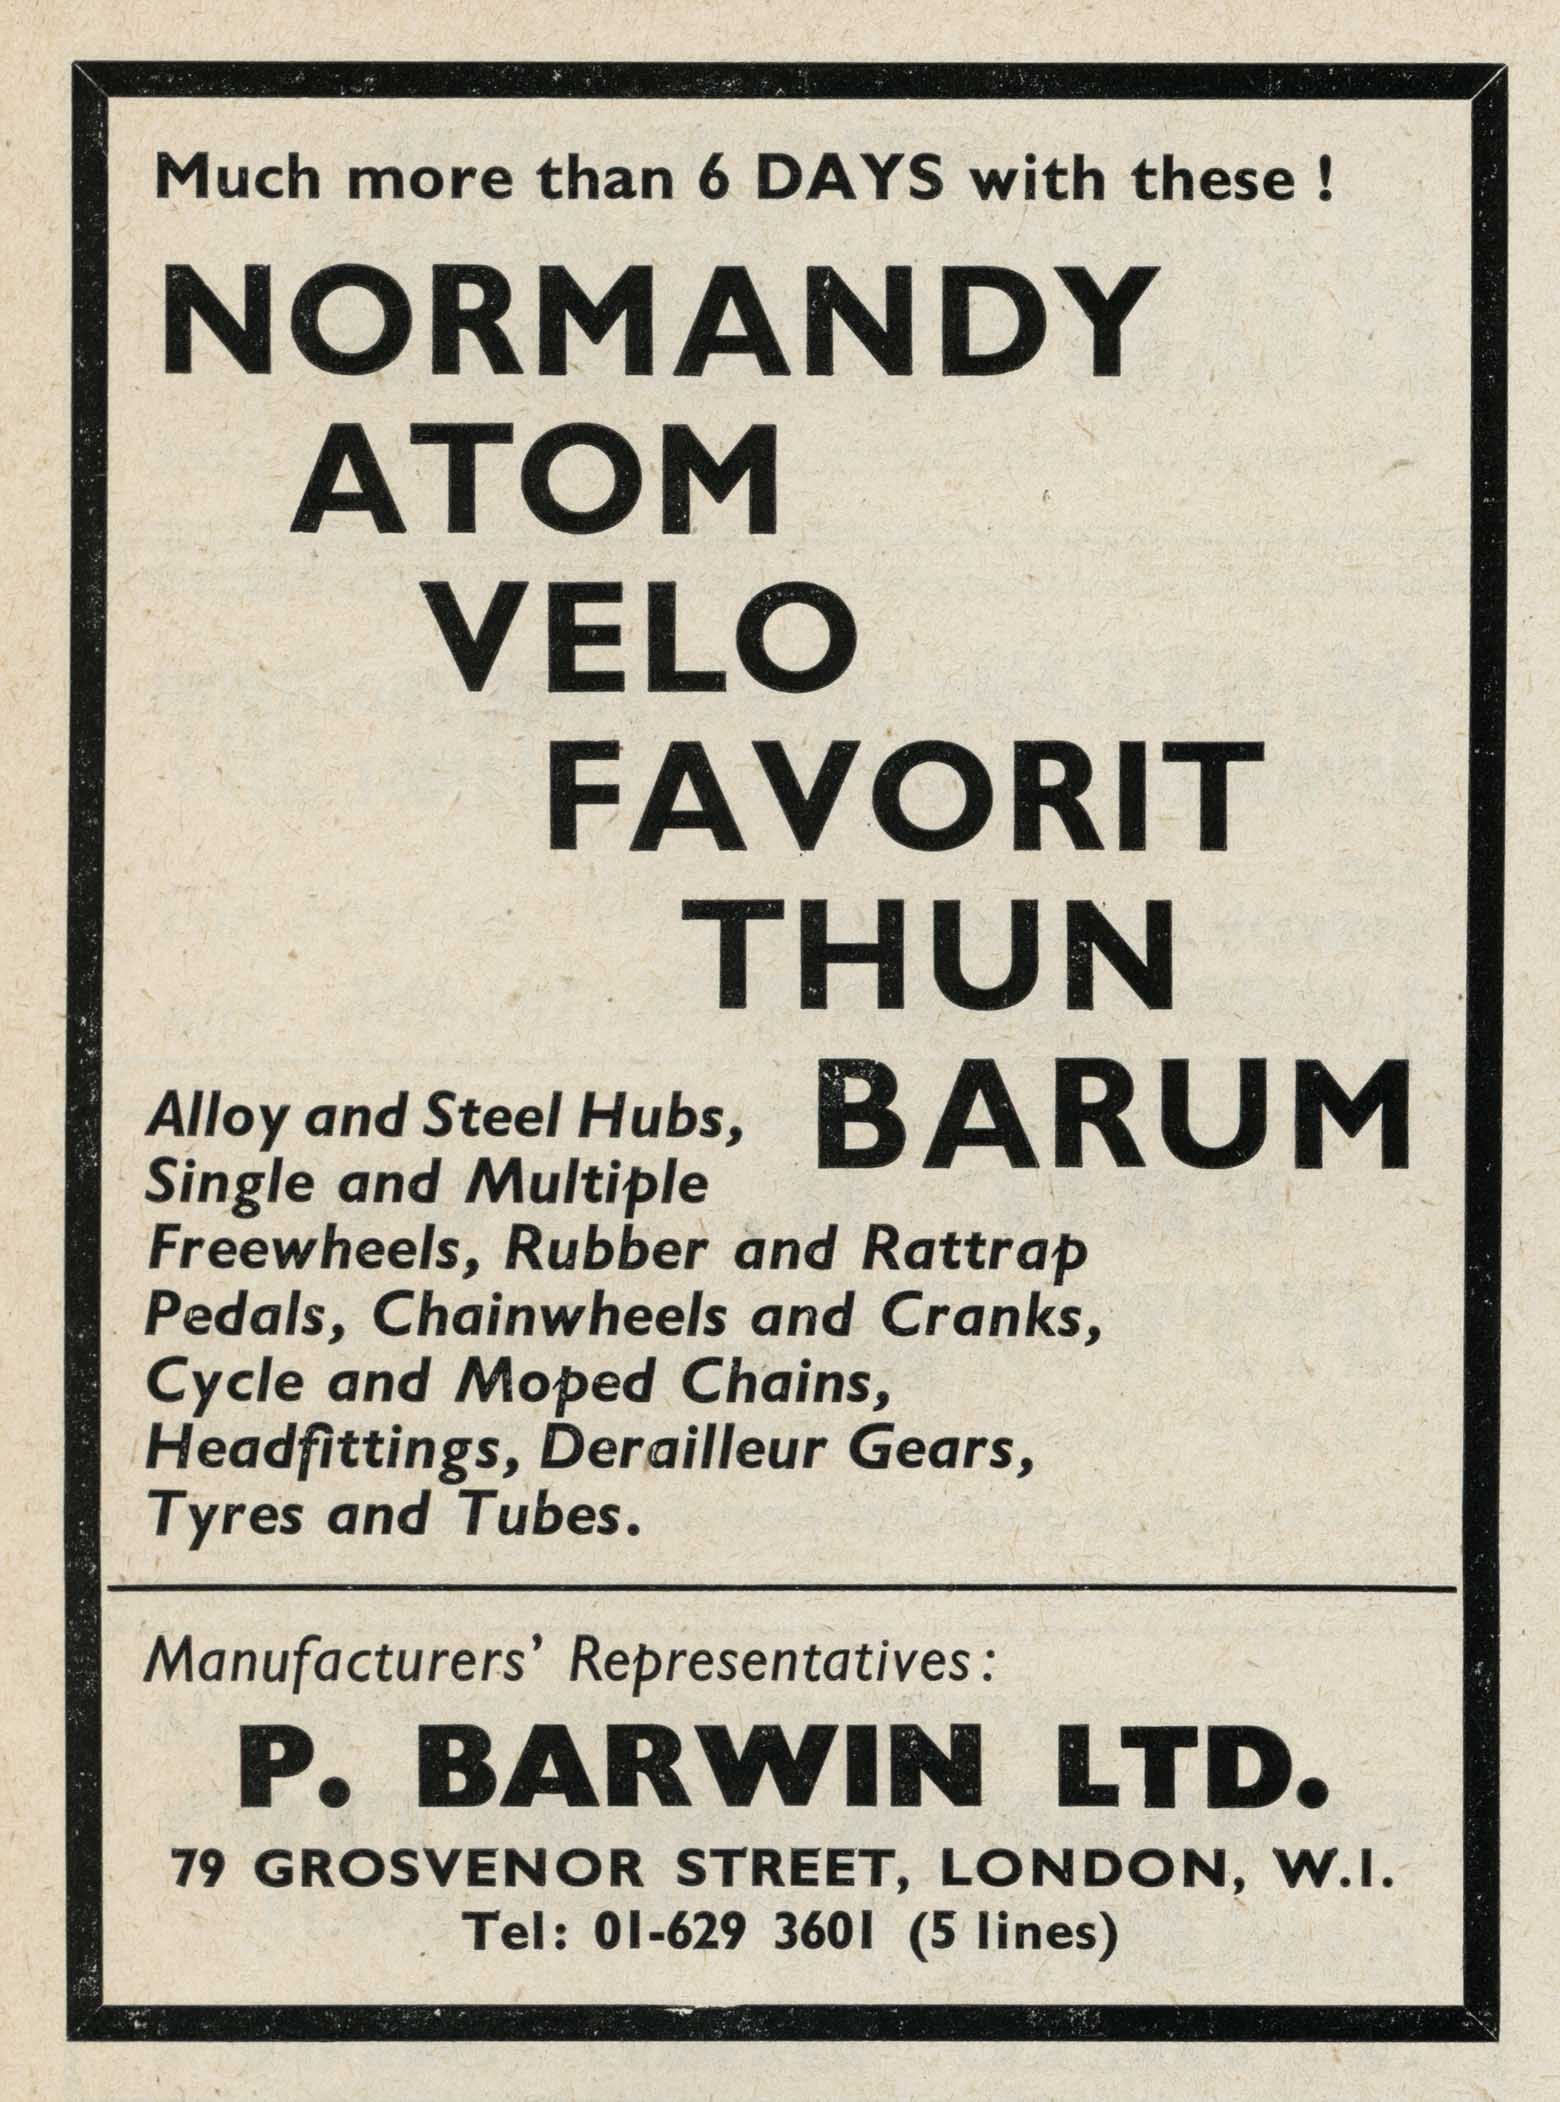 Sporting Cyclist October 1967 Barwin advert main image